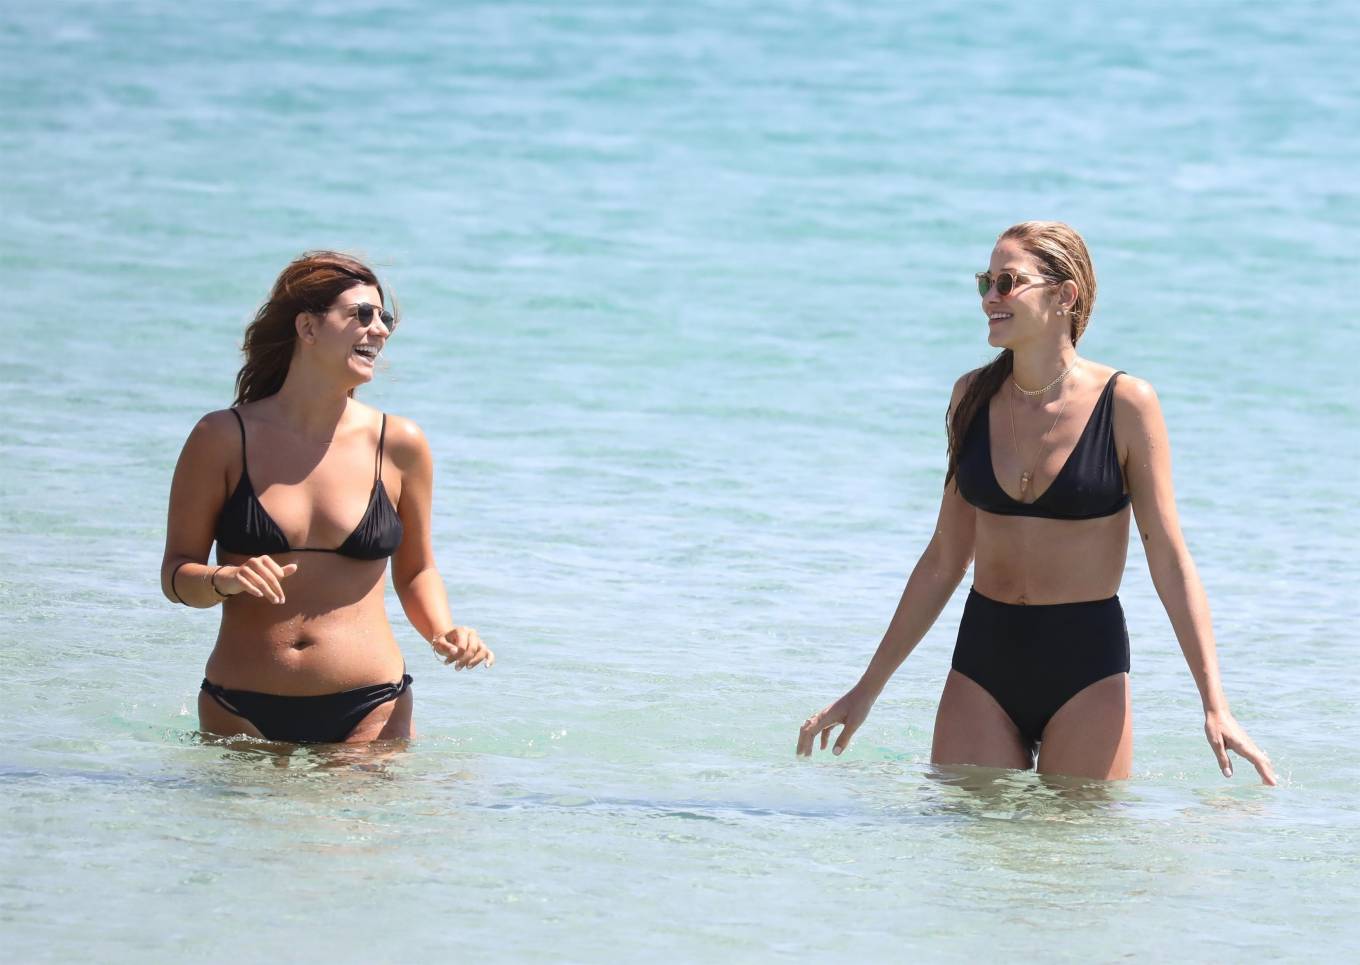 Ana Beatriz Barros – Wearing black bikini at the beach on a holiday in Mykonos